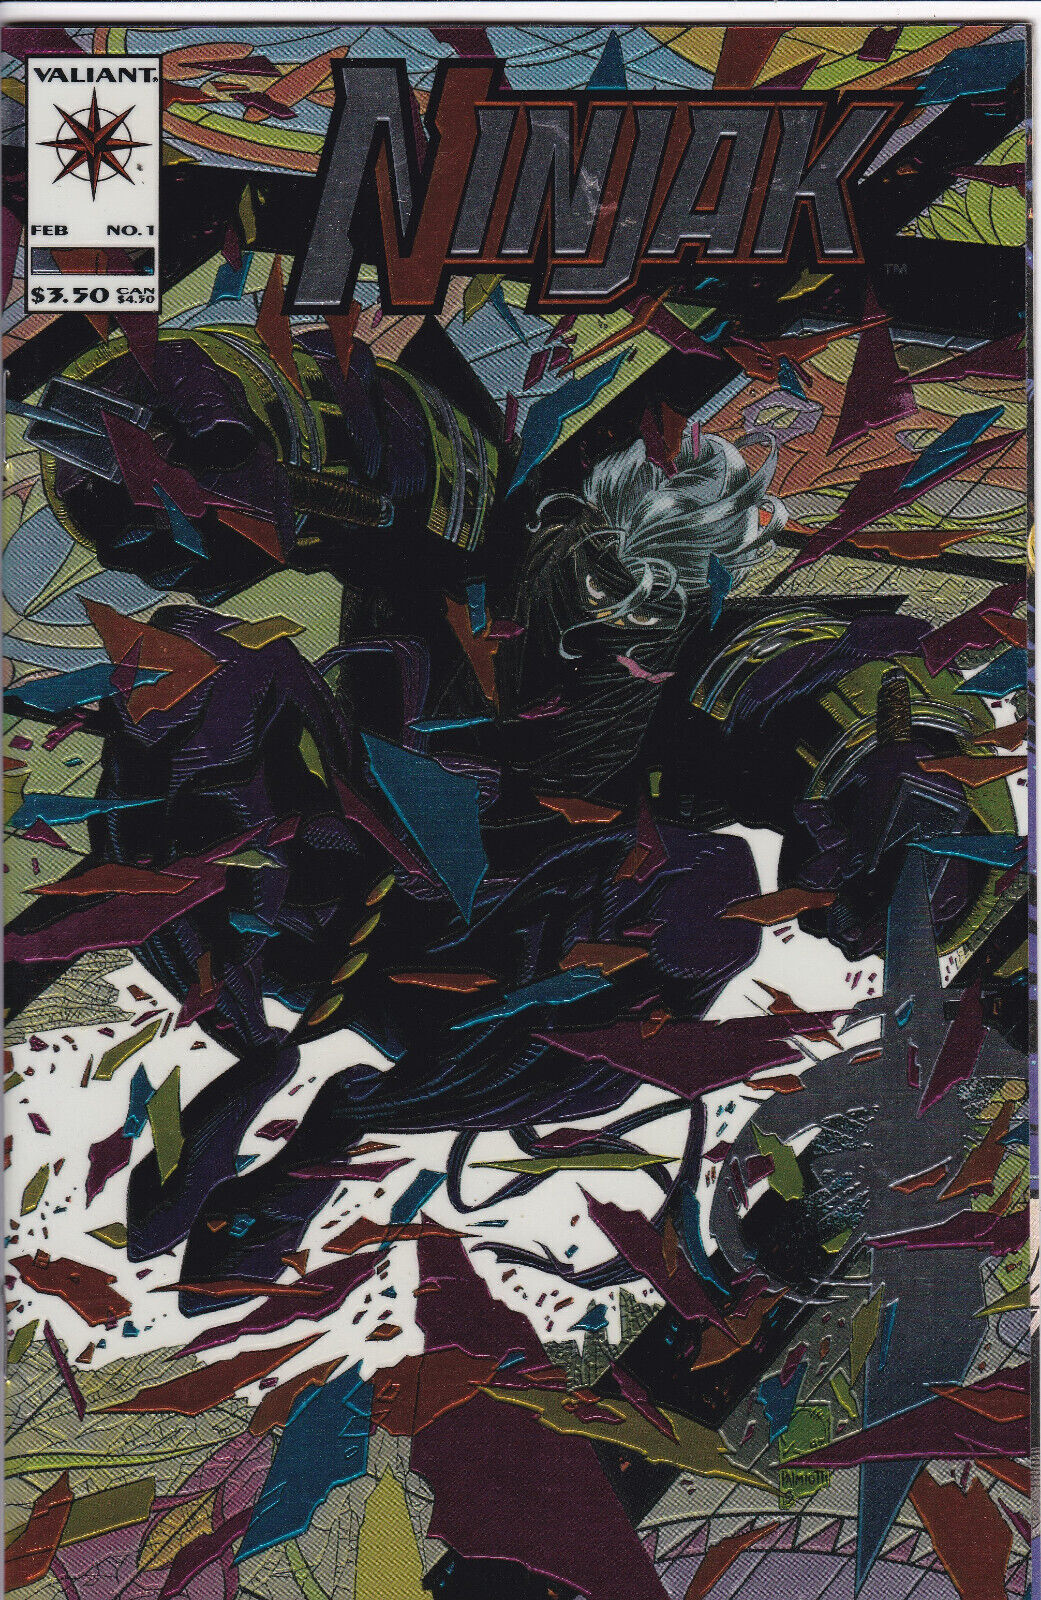 Ninjak #1 Vol. 1 (1994-1995) Valiant Entertainment, Chromium Cover, High Grade